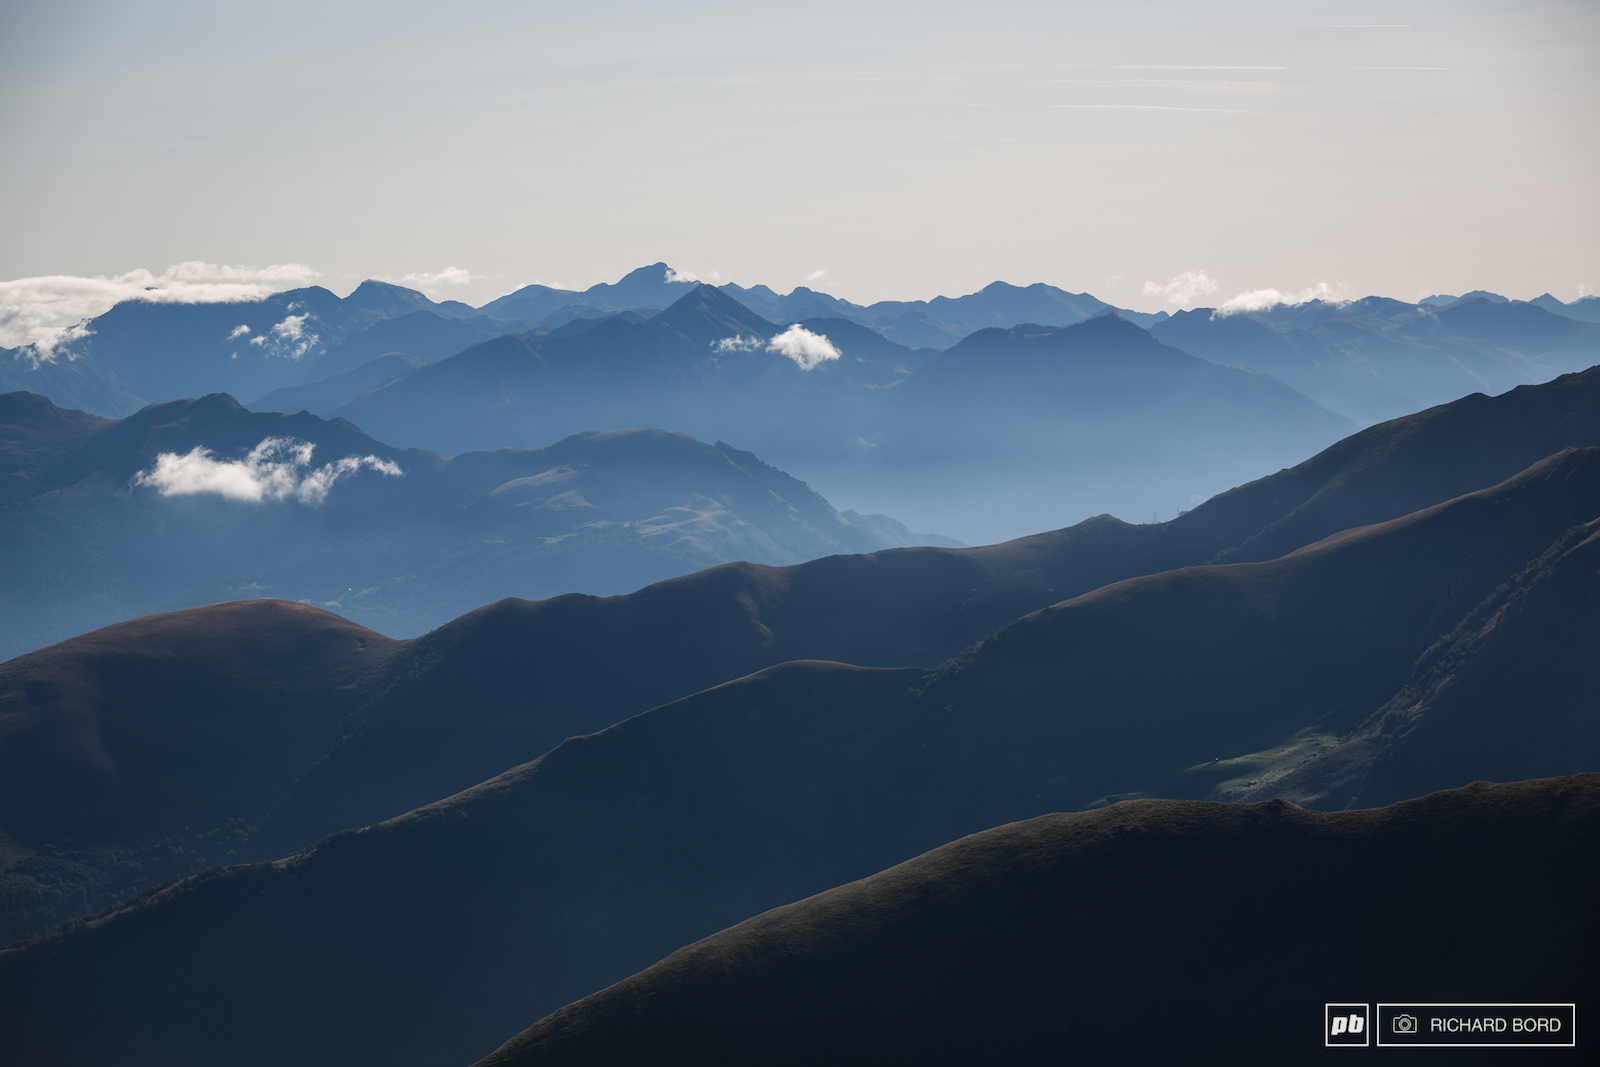 The Pyrenees mountains.